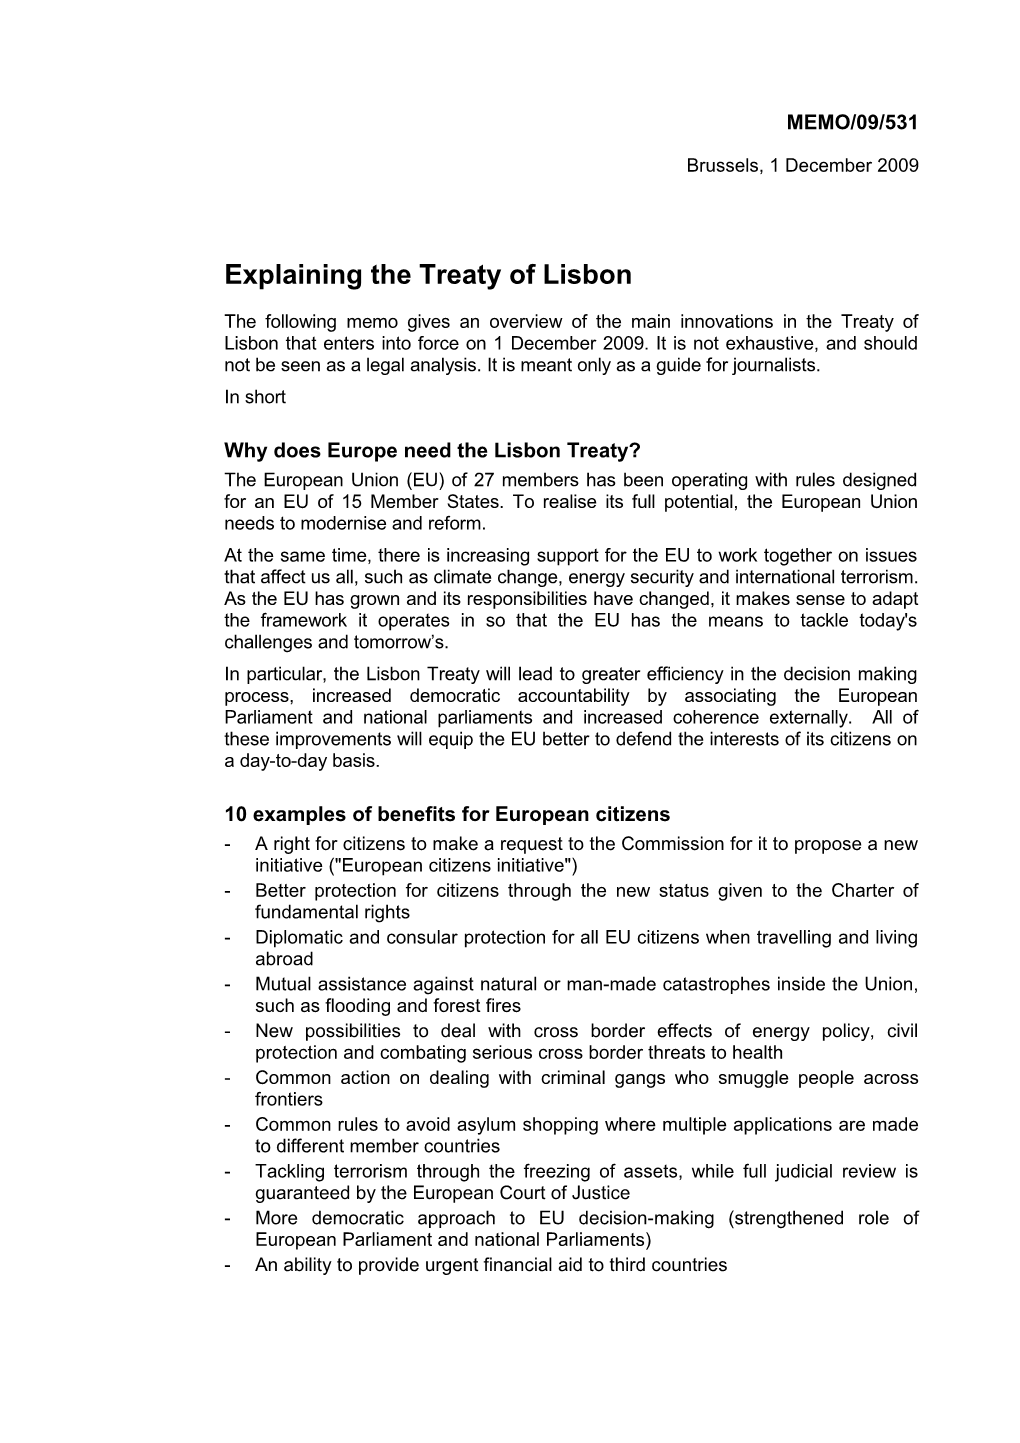 Explaining the Treaty of Lisbon